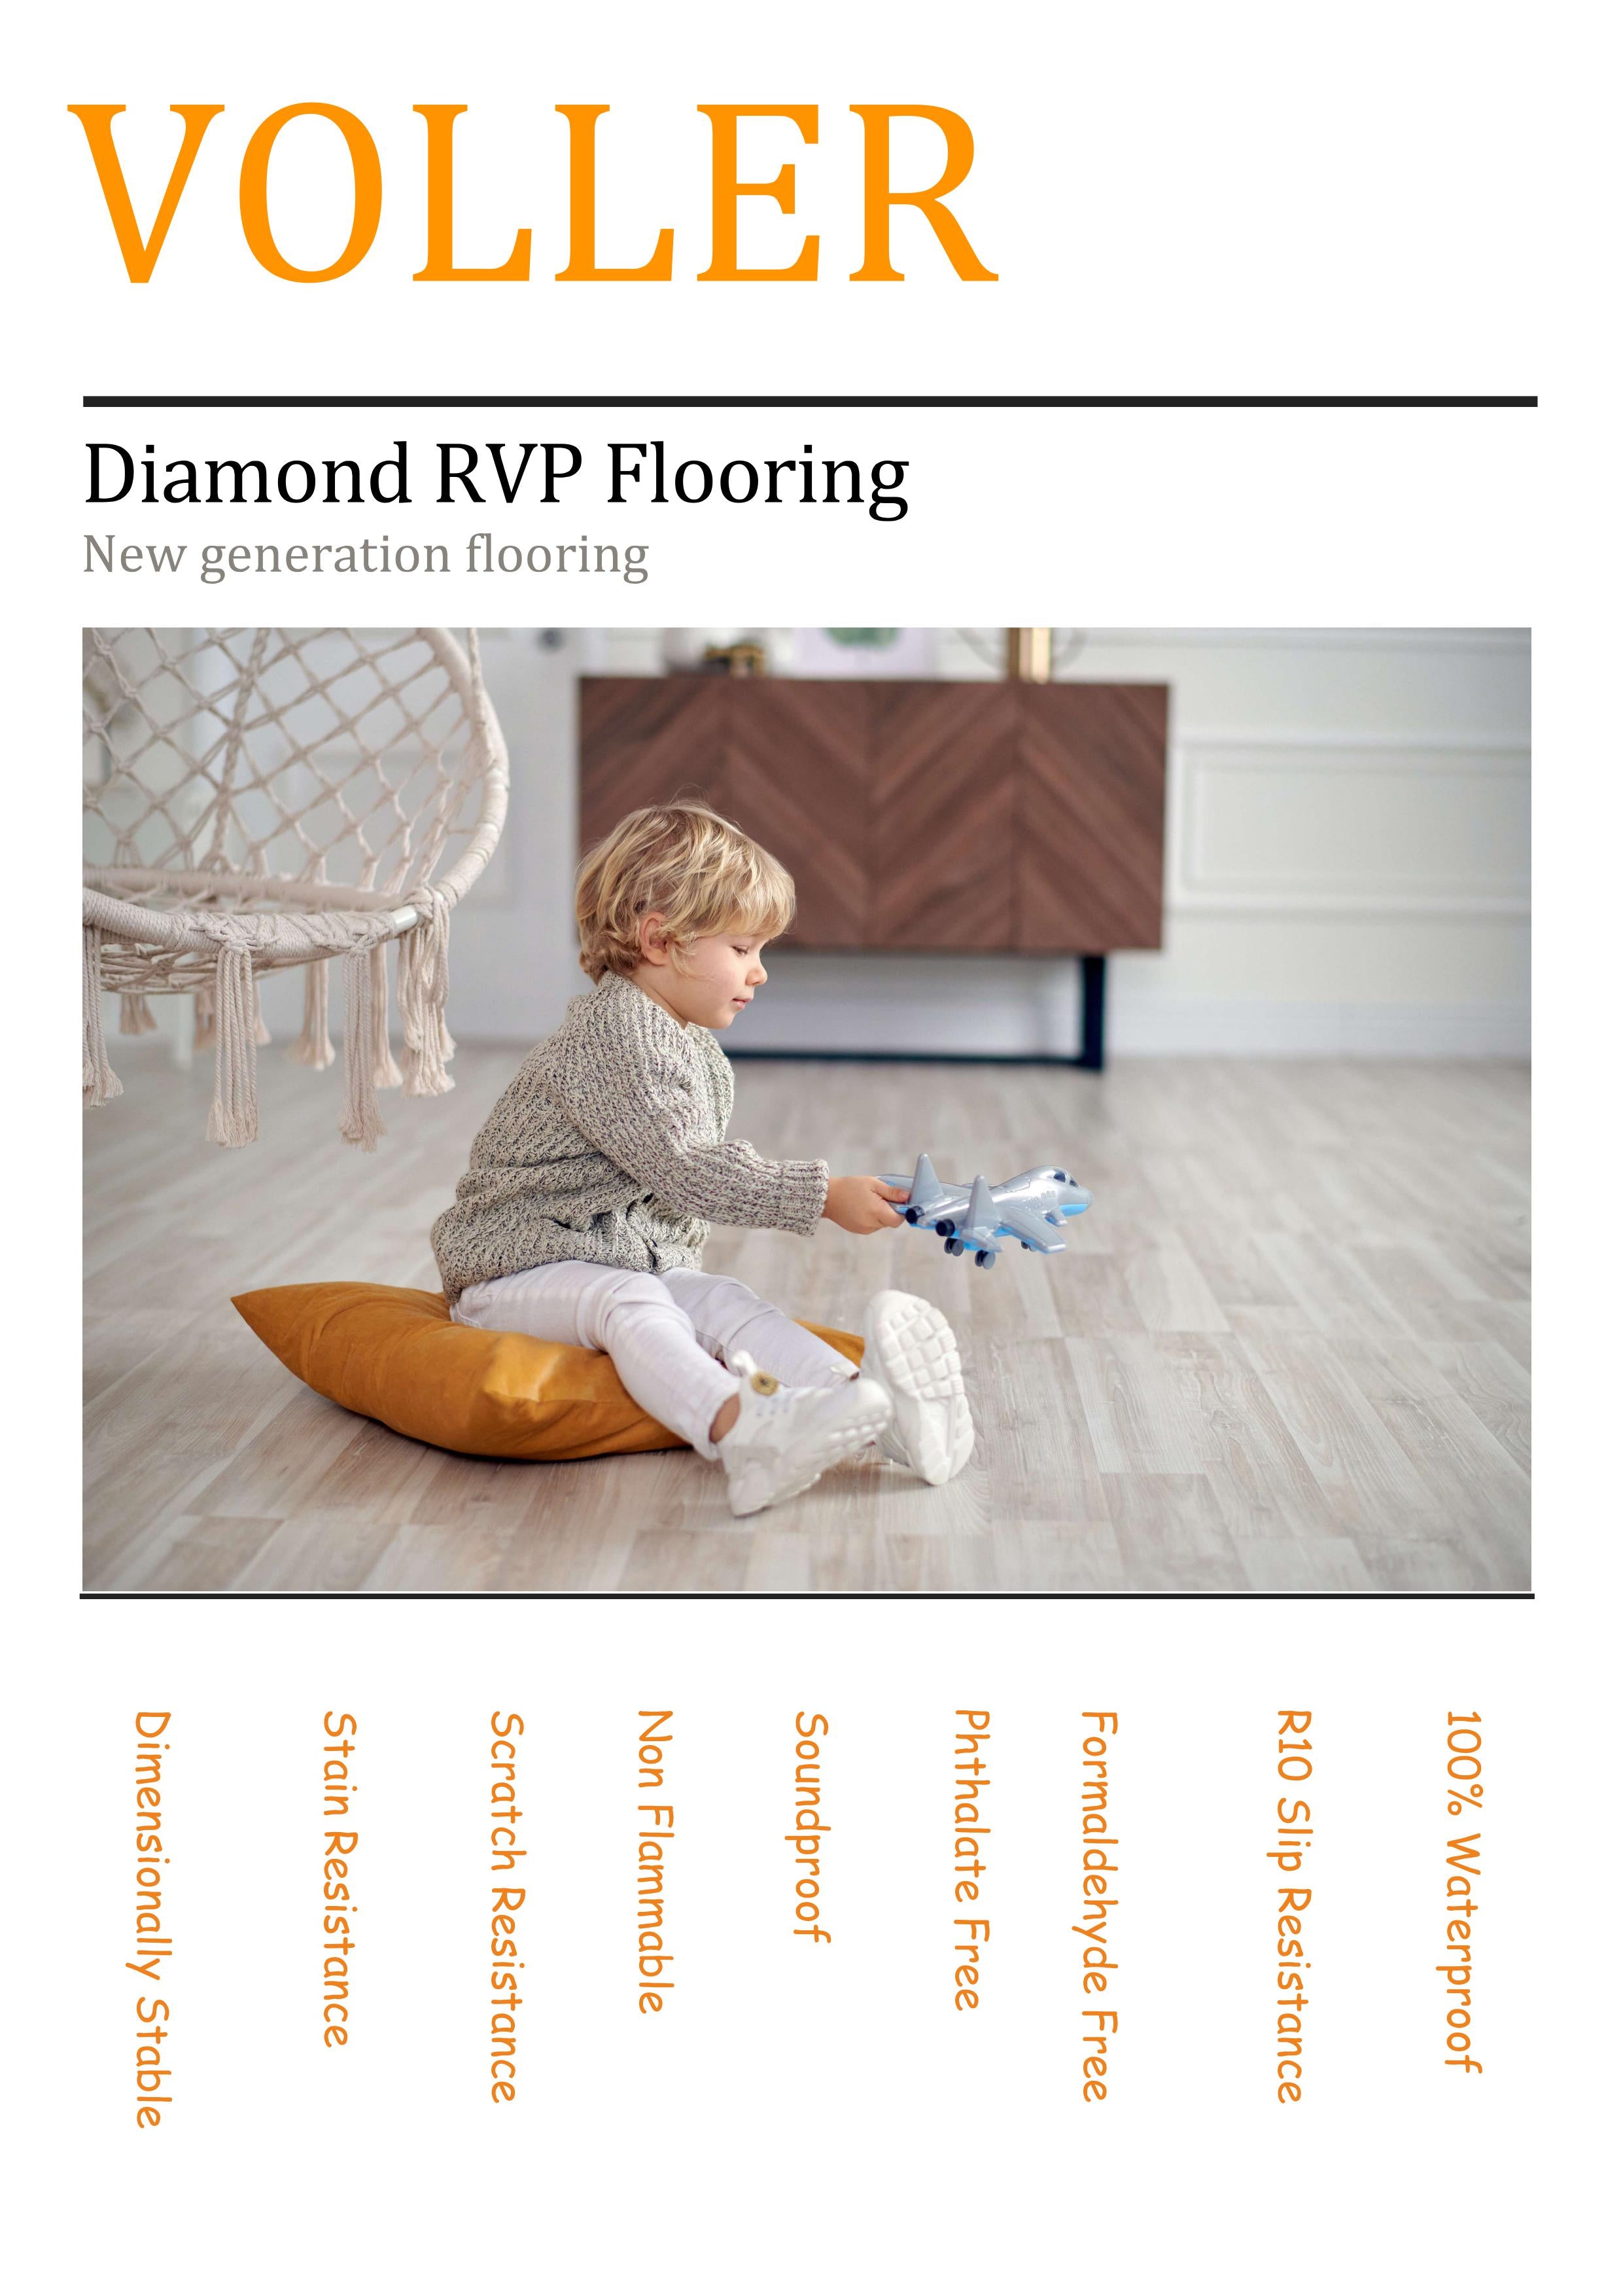 VOLLER Diamond RVP Flooring